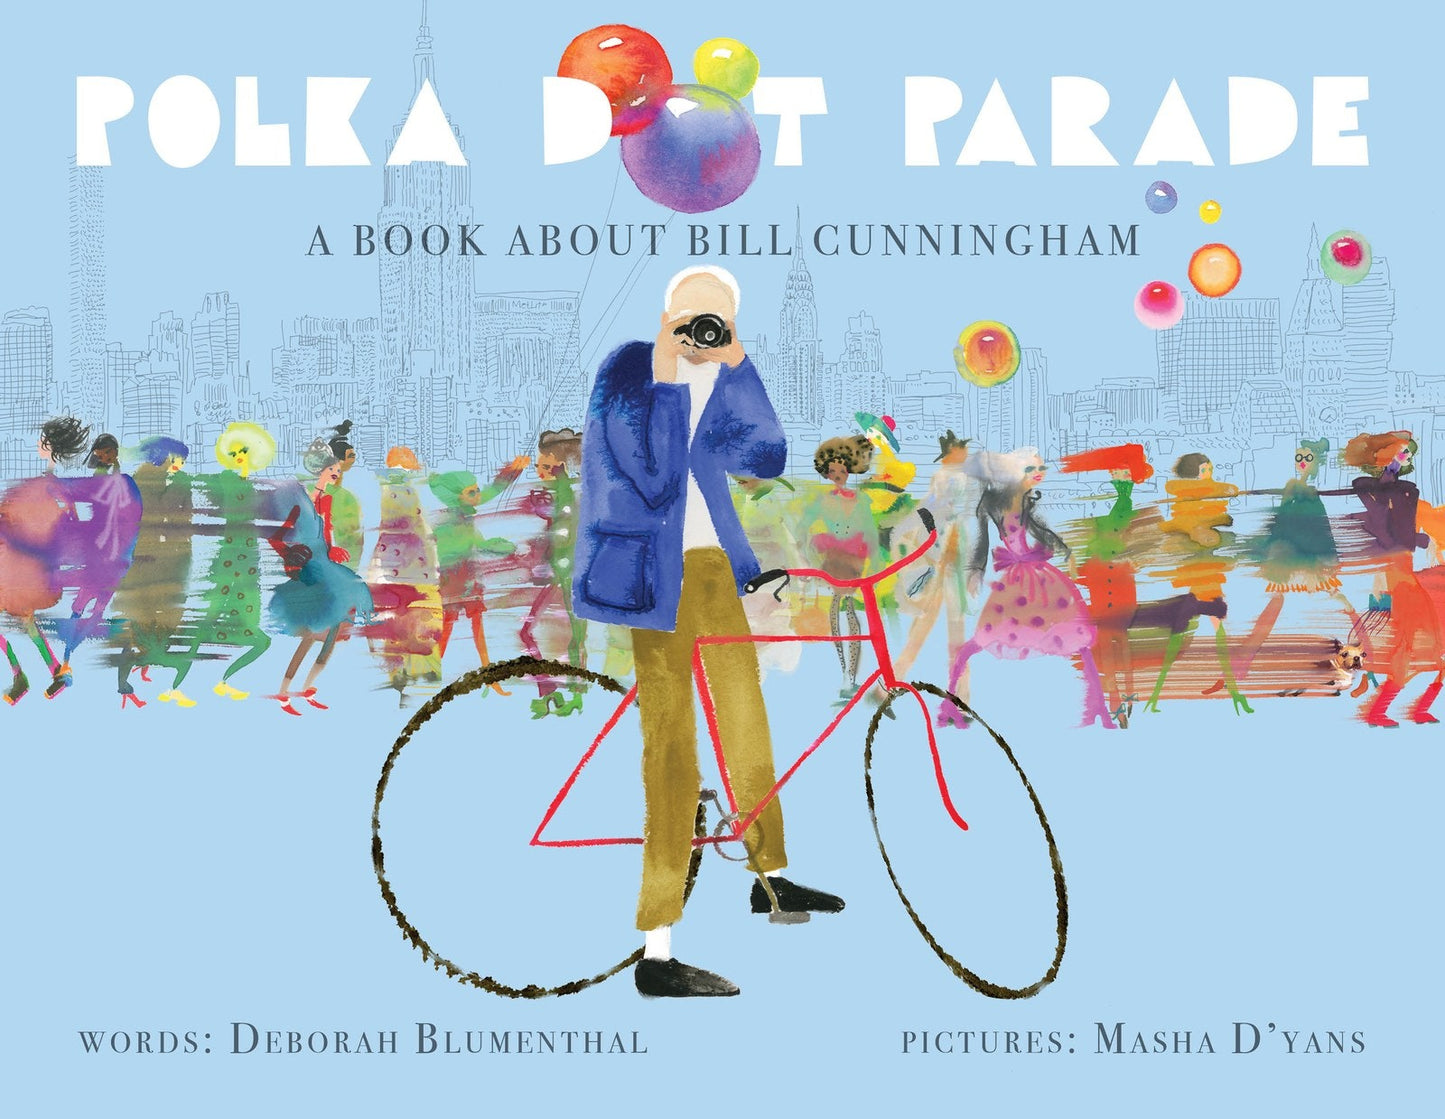 Polka Dot Parade, a book about Bill Cunningham